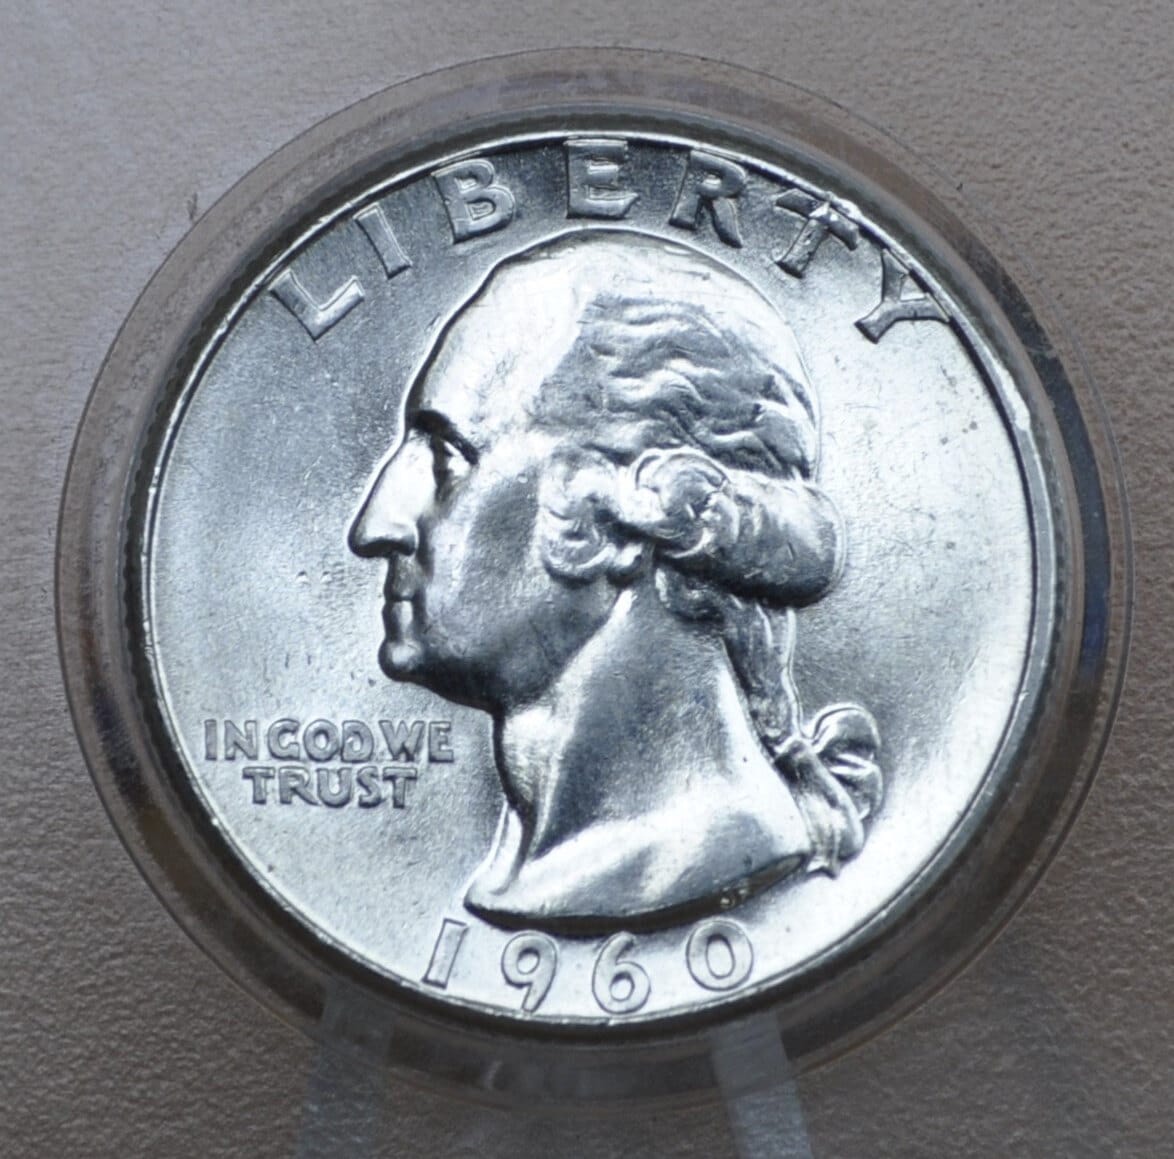 1960 Washington Silver Quarter - BU (Uncirculated) Condition - Philadelphia Mint - 1960 P Quarter 1960 Washington Quarter - High Grade